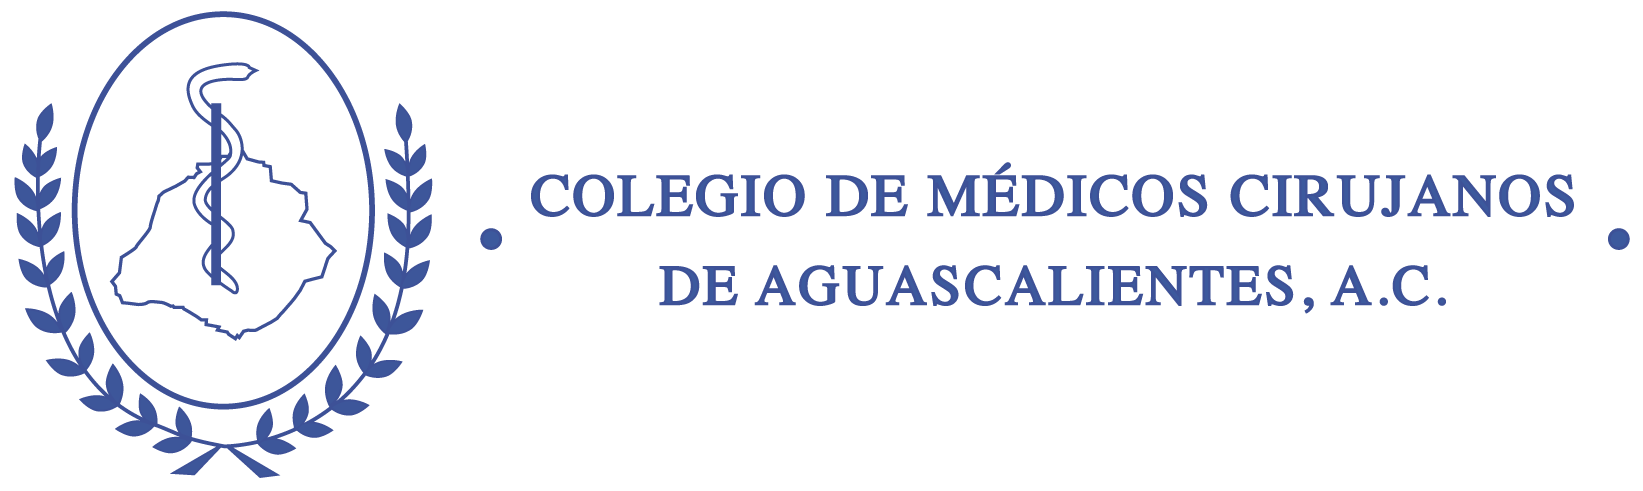 Colegio de Médicos Cirujanos de Aguascalientes